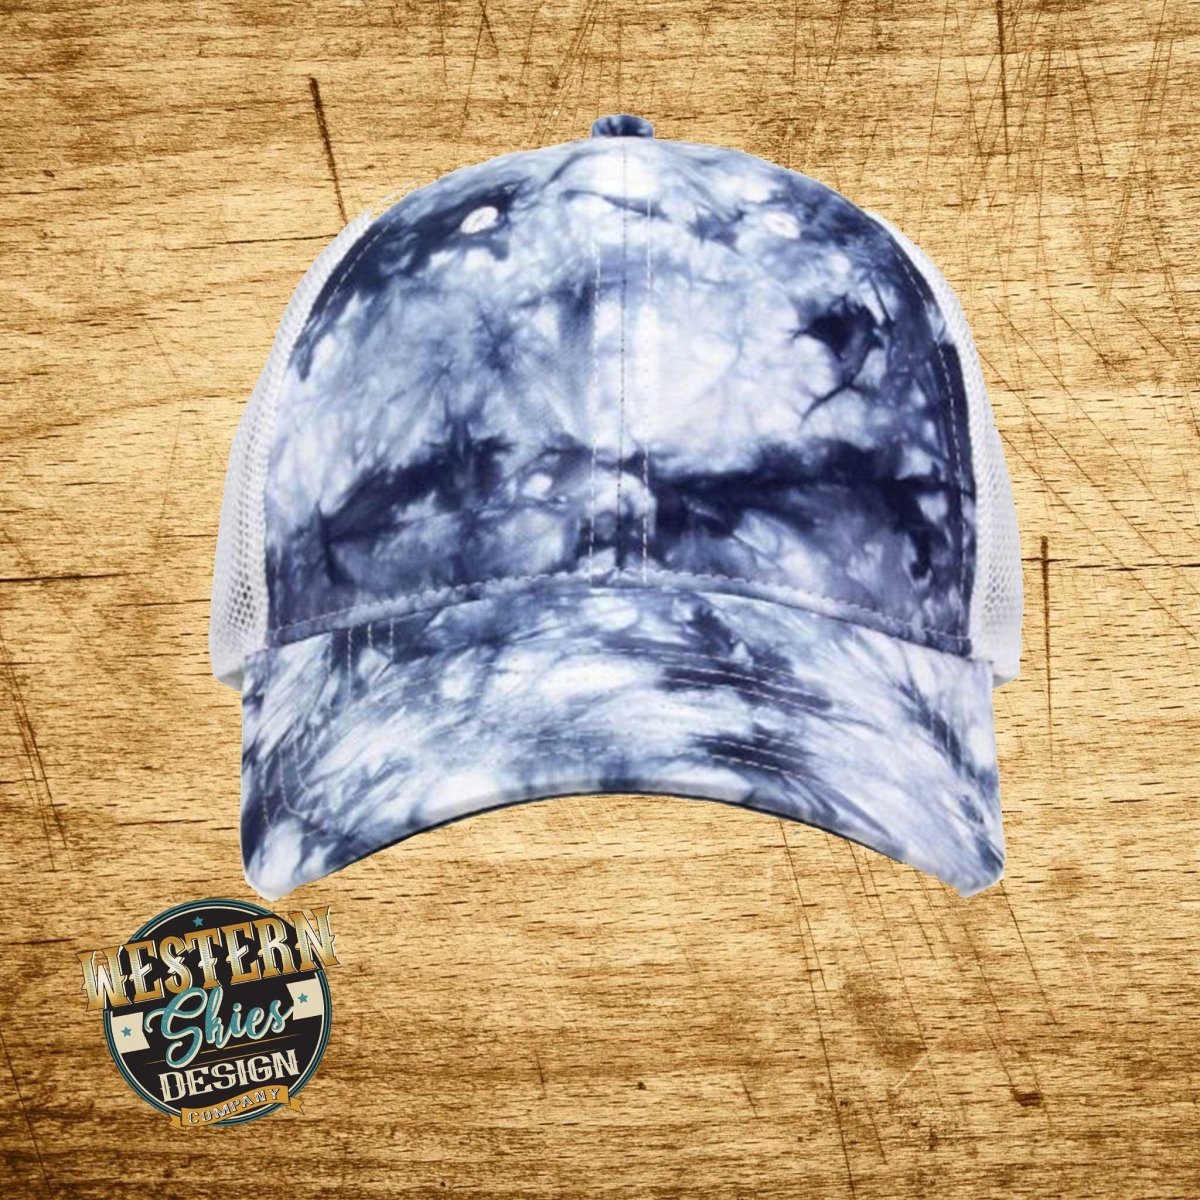 The Game Tie Dye Baseball Cap - Western Skies Design Company